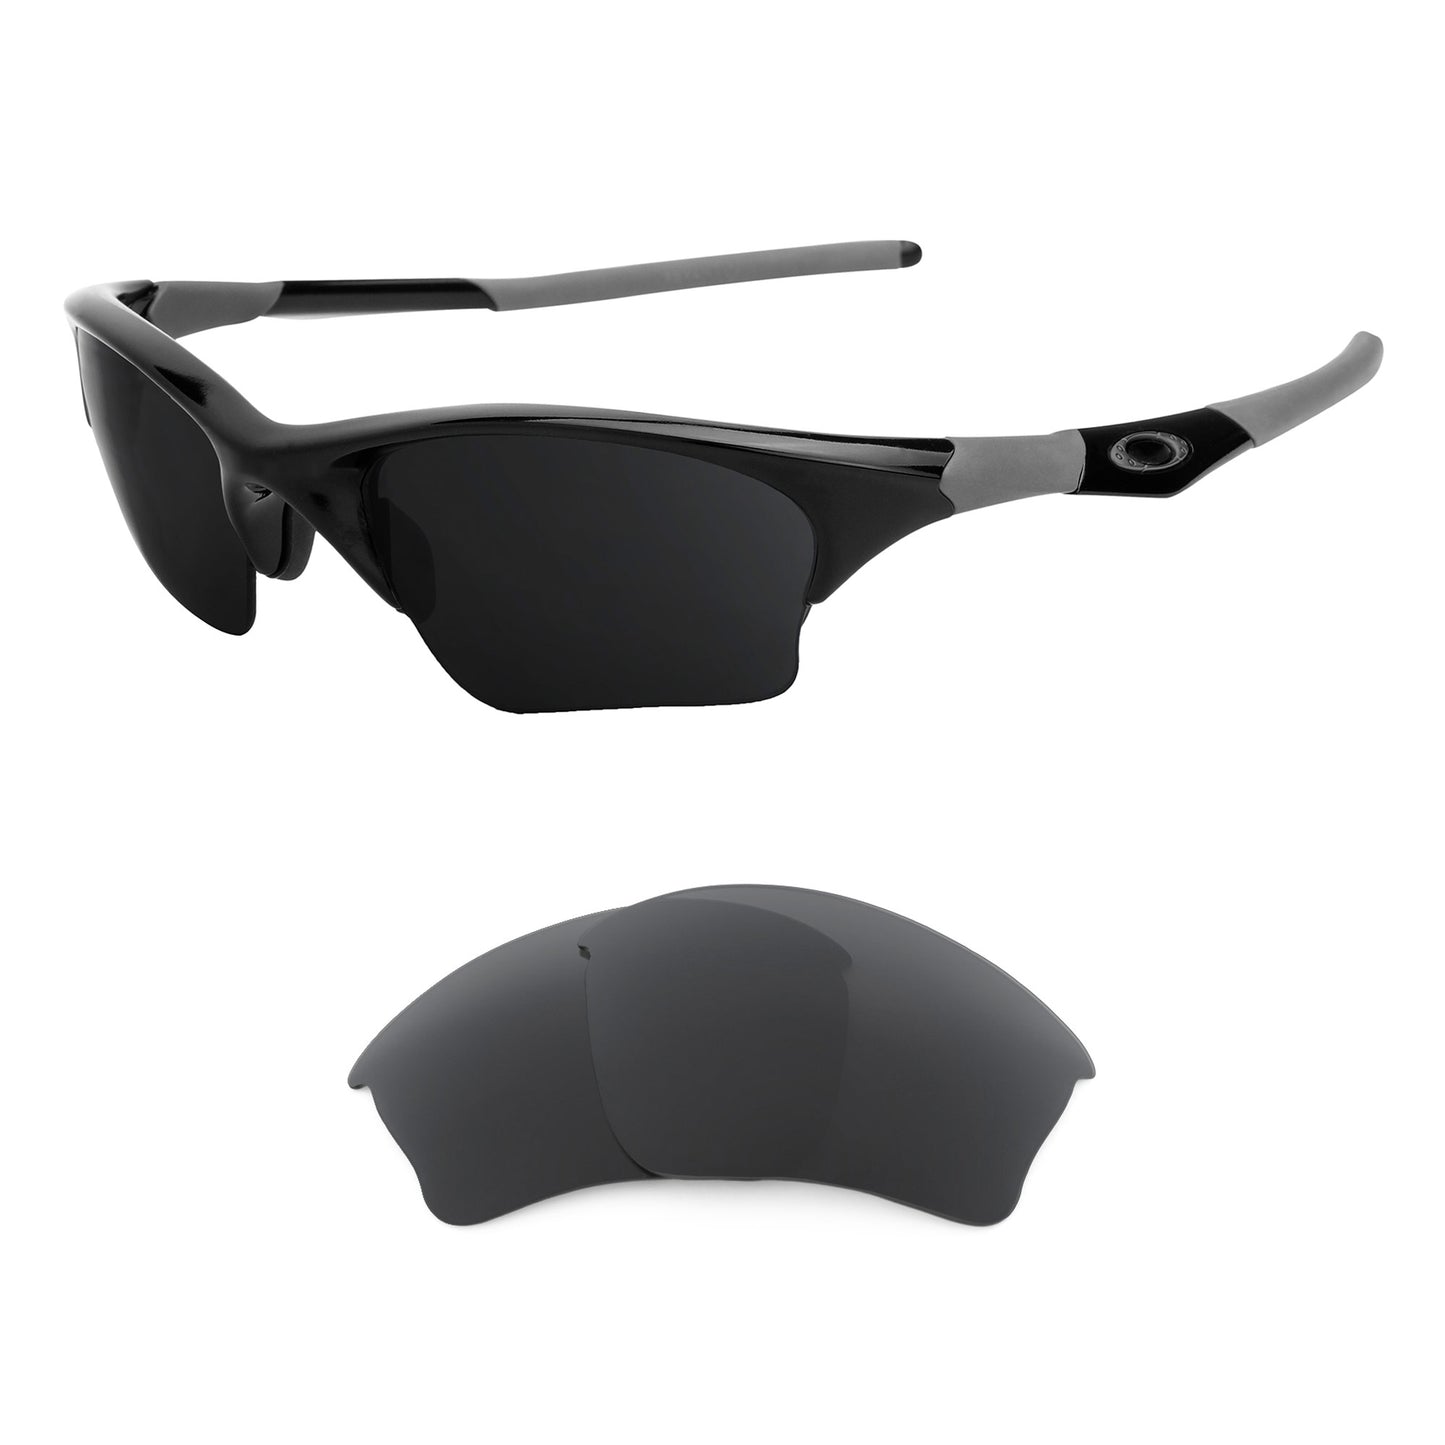 Oakley Half Jacket XLJ (Low Bridge Fit) sunglasses with replacement lenses